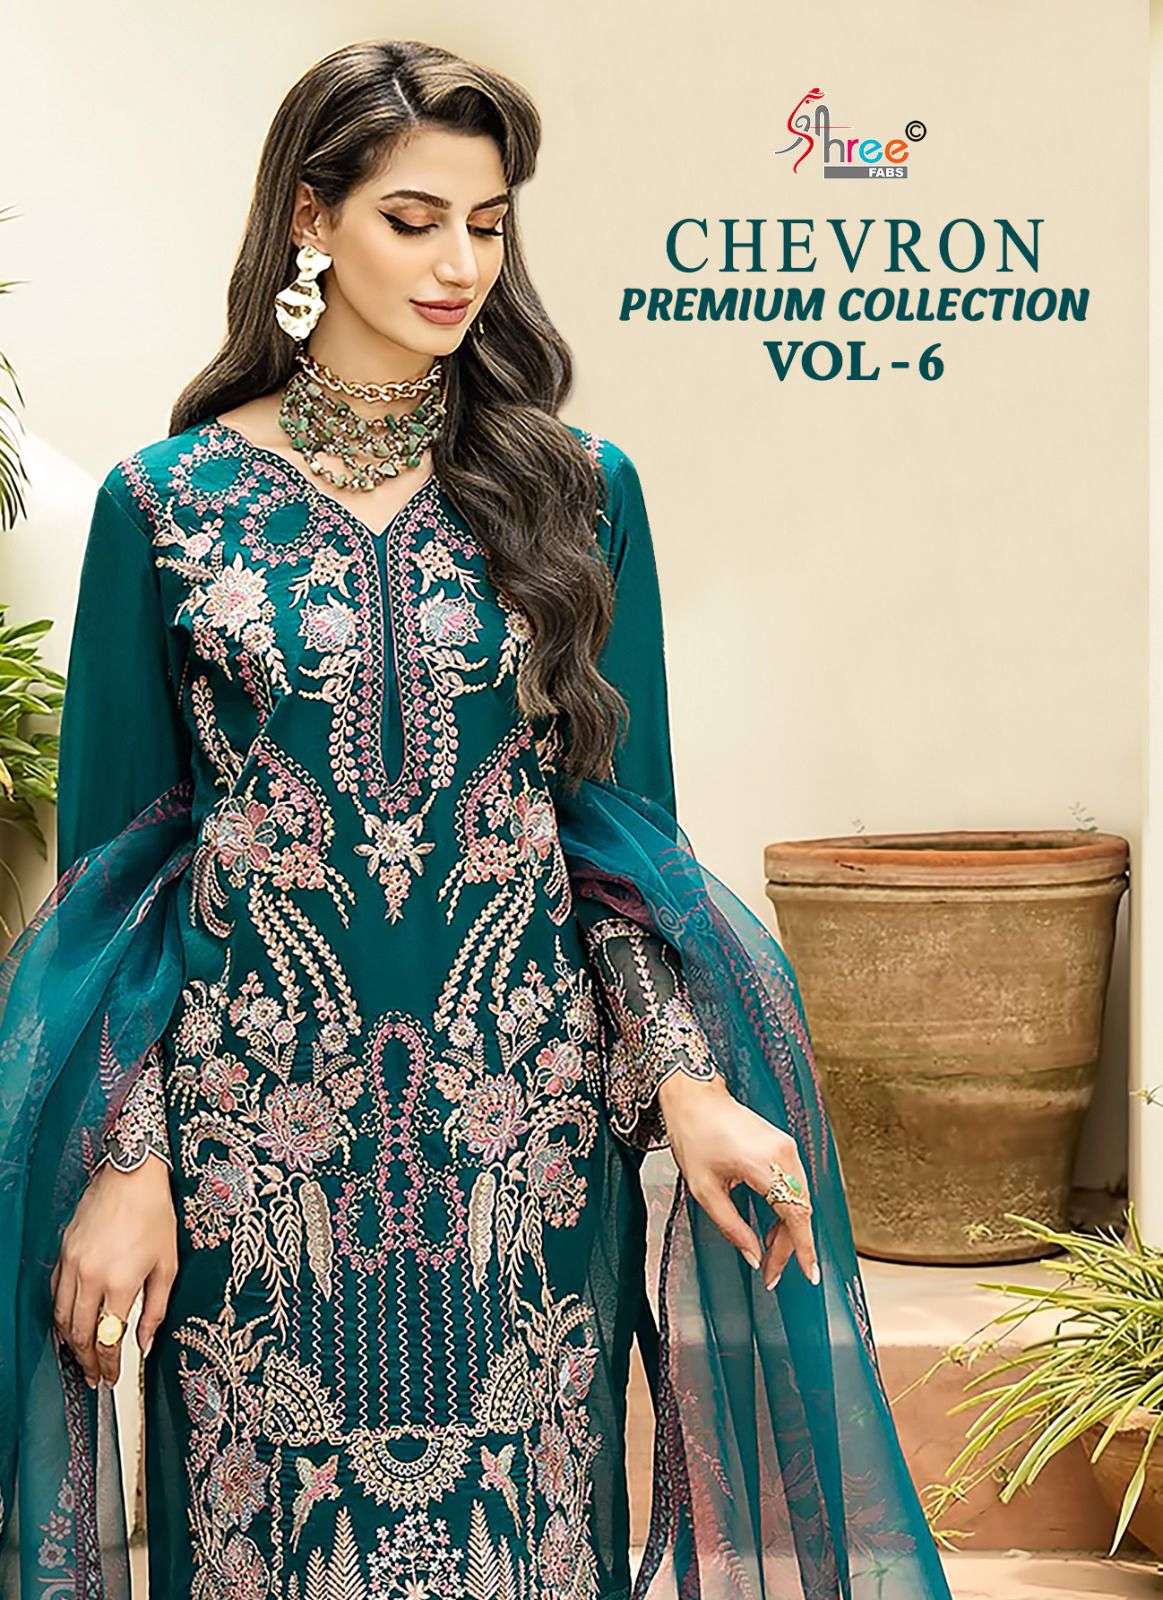 Shree Fabs Chevron Premium Collection Vol 6 Exclusive Pakistani Suit New Designs